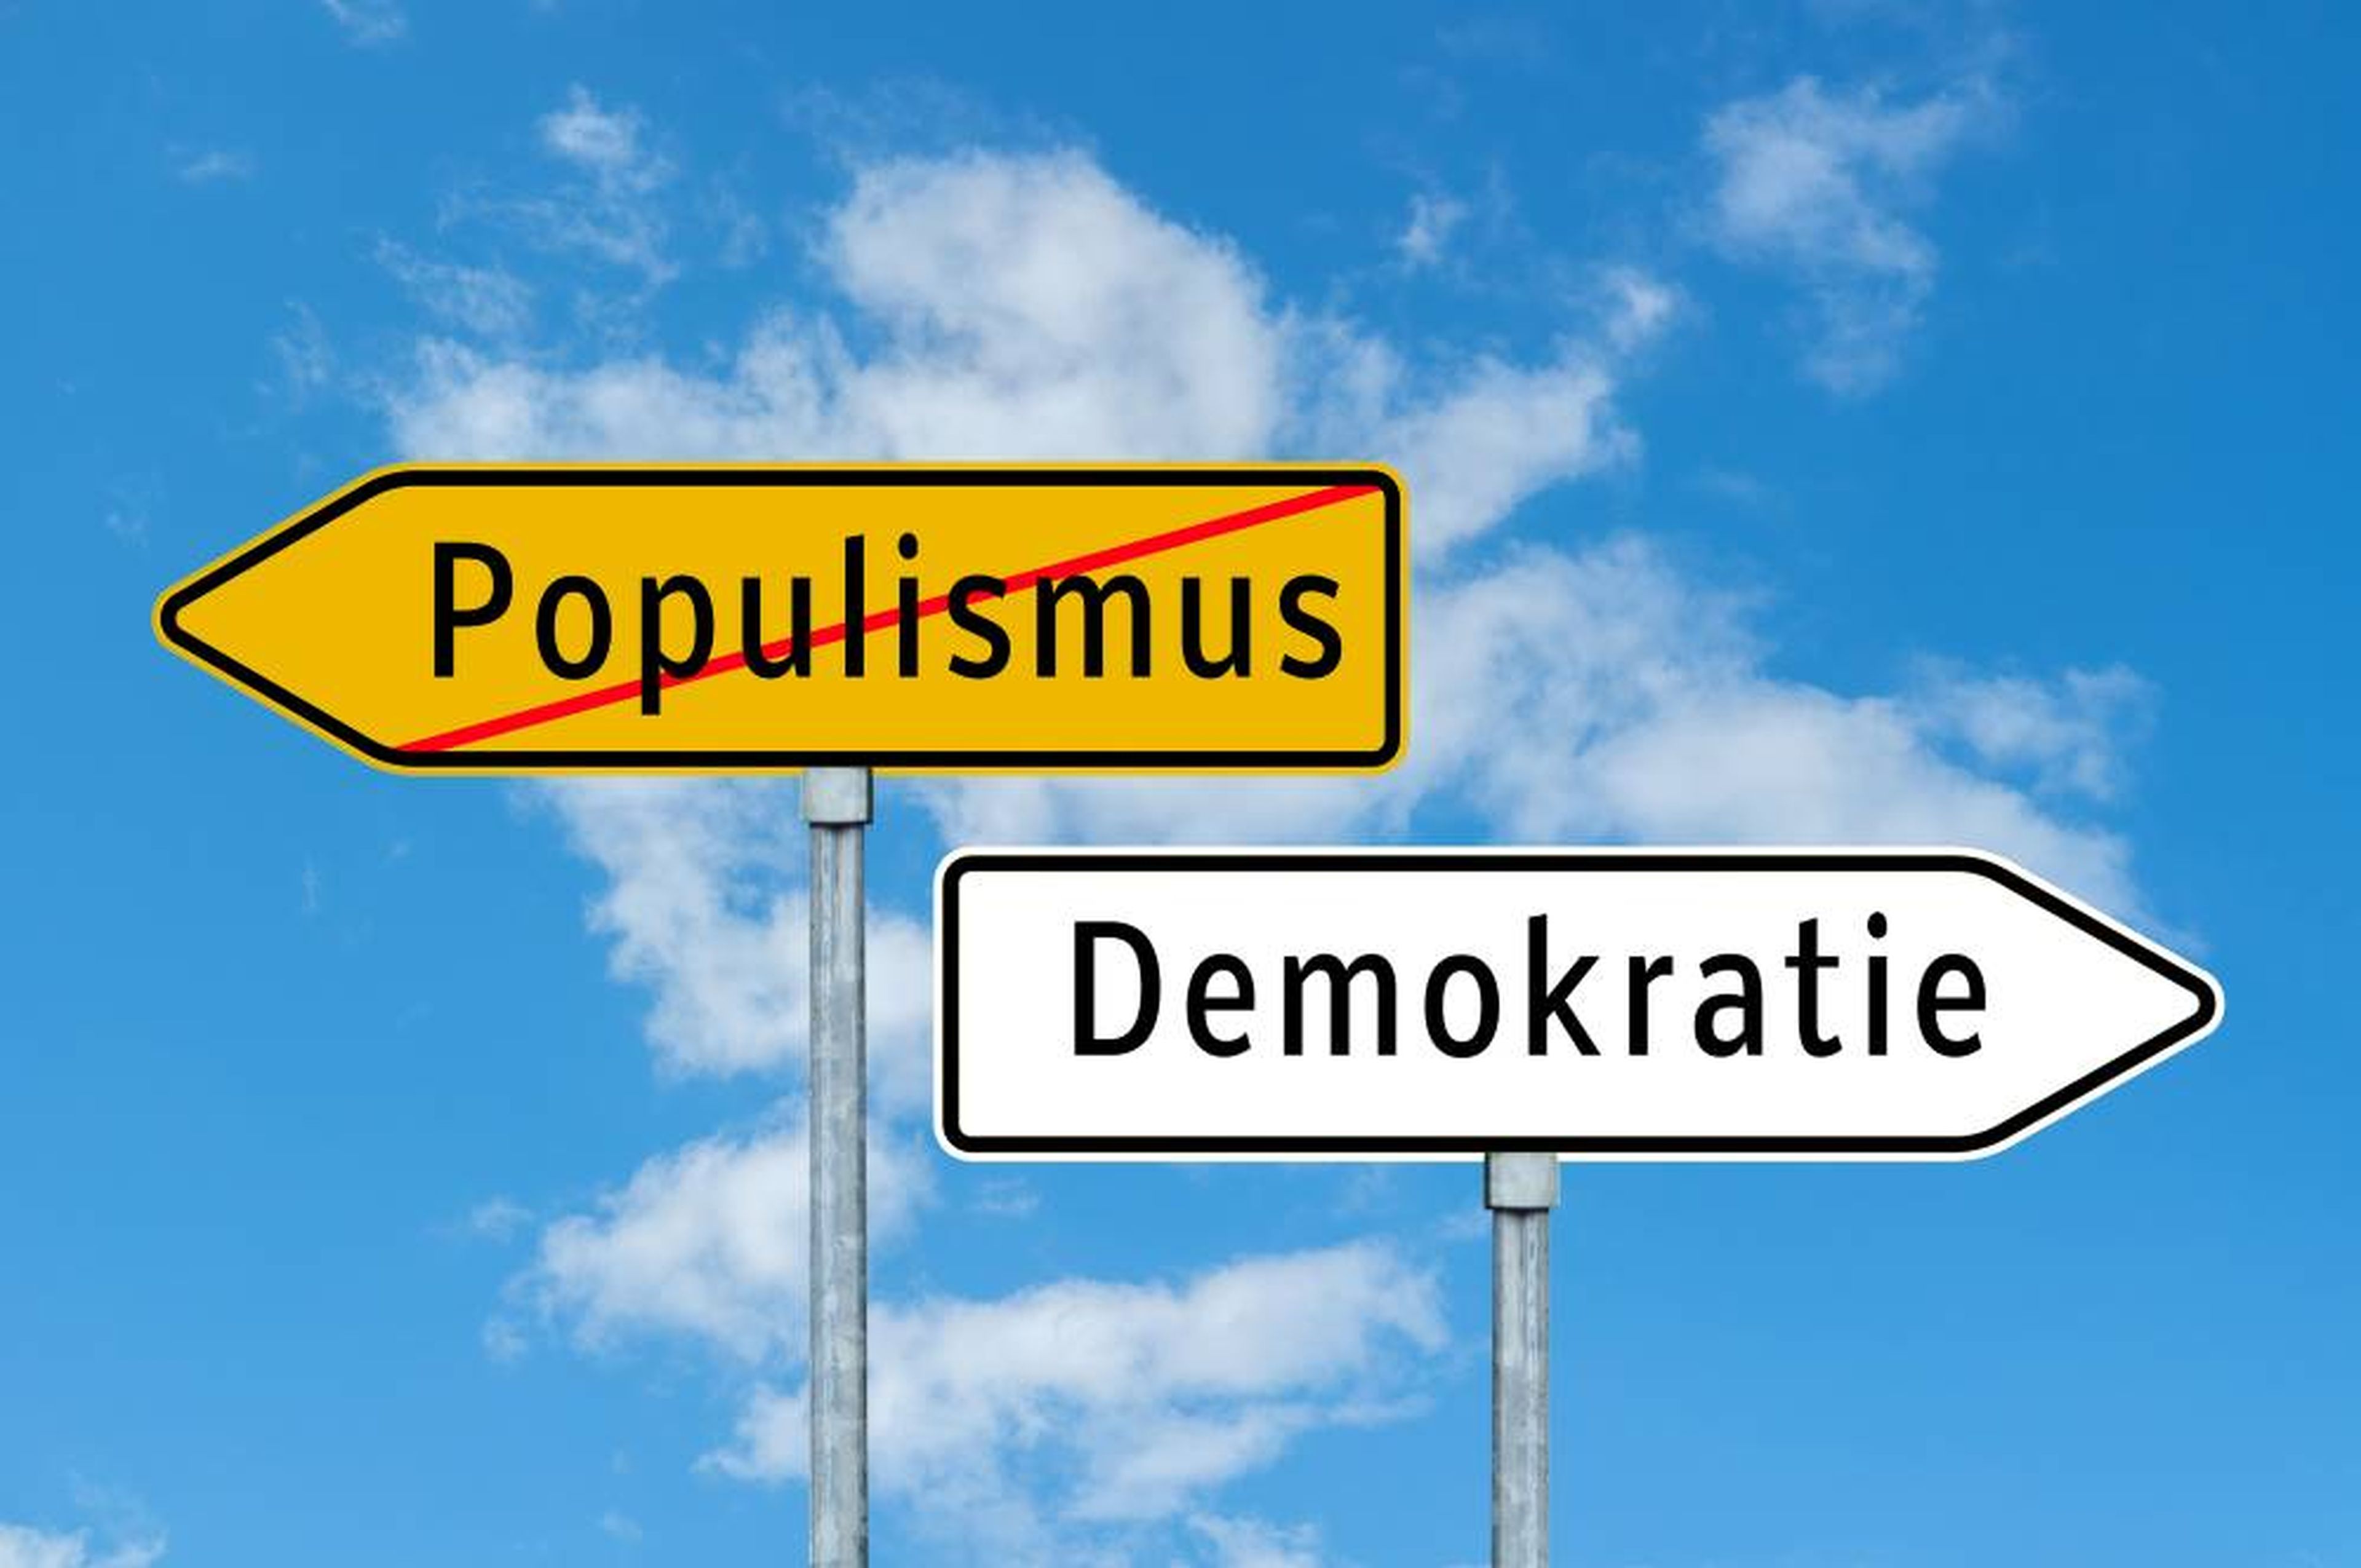 Populism - Democracy